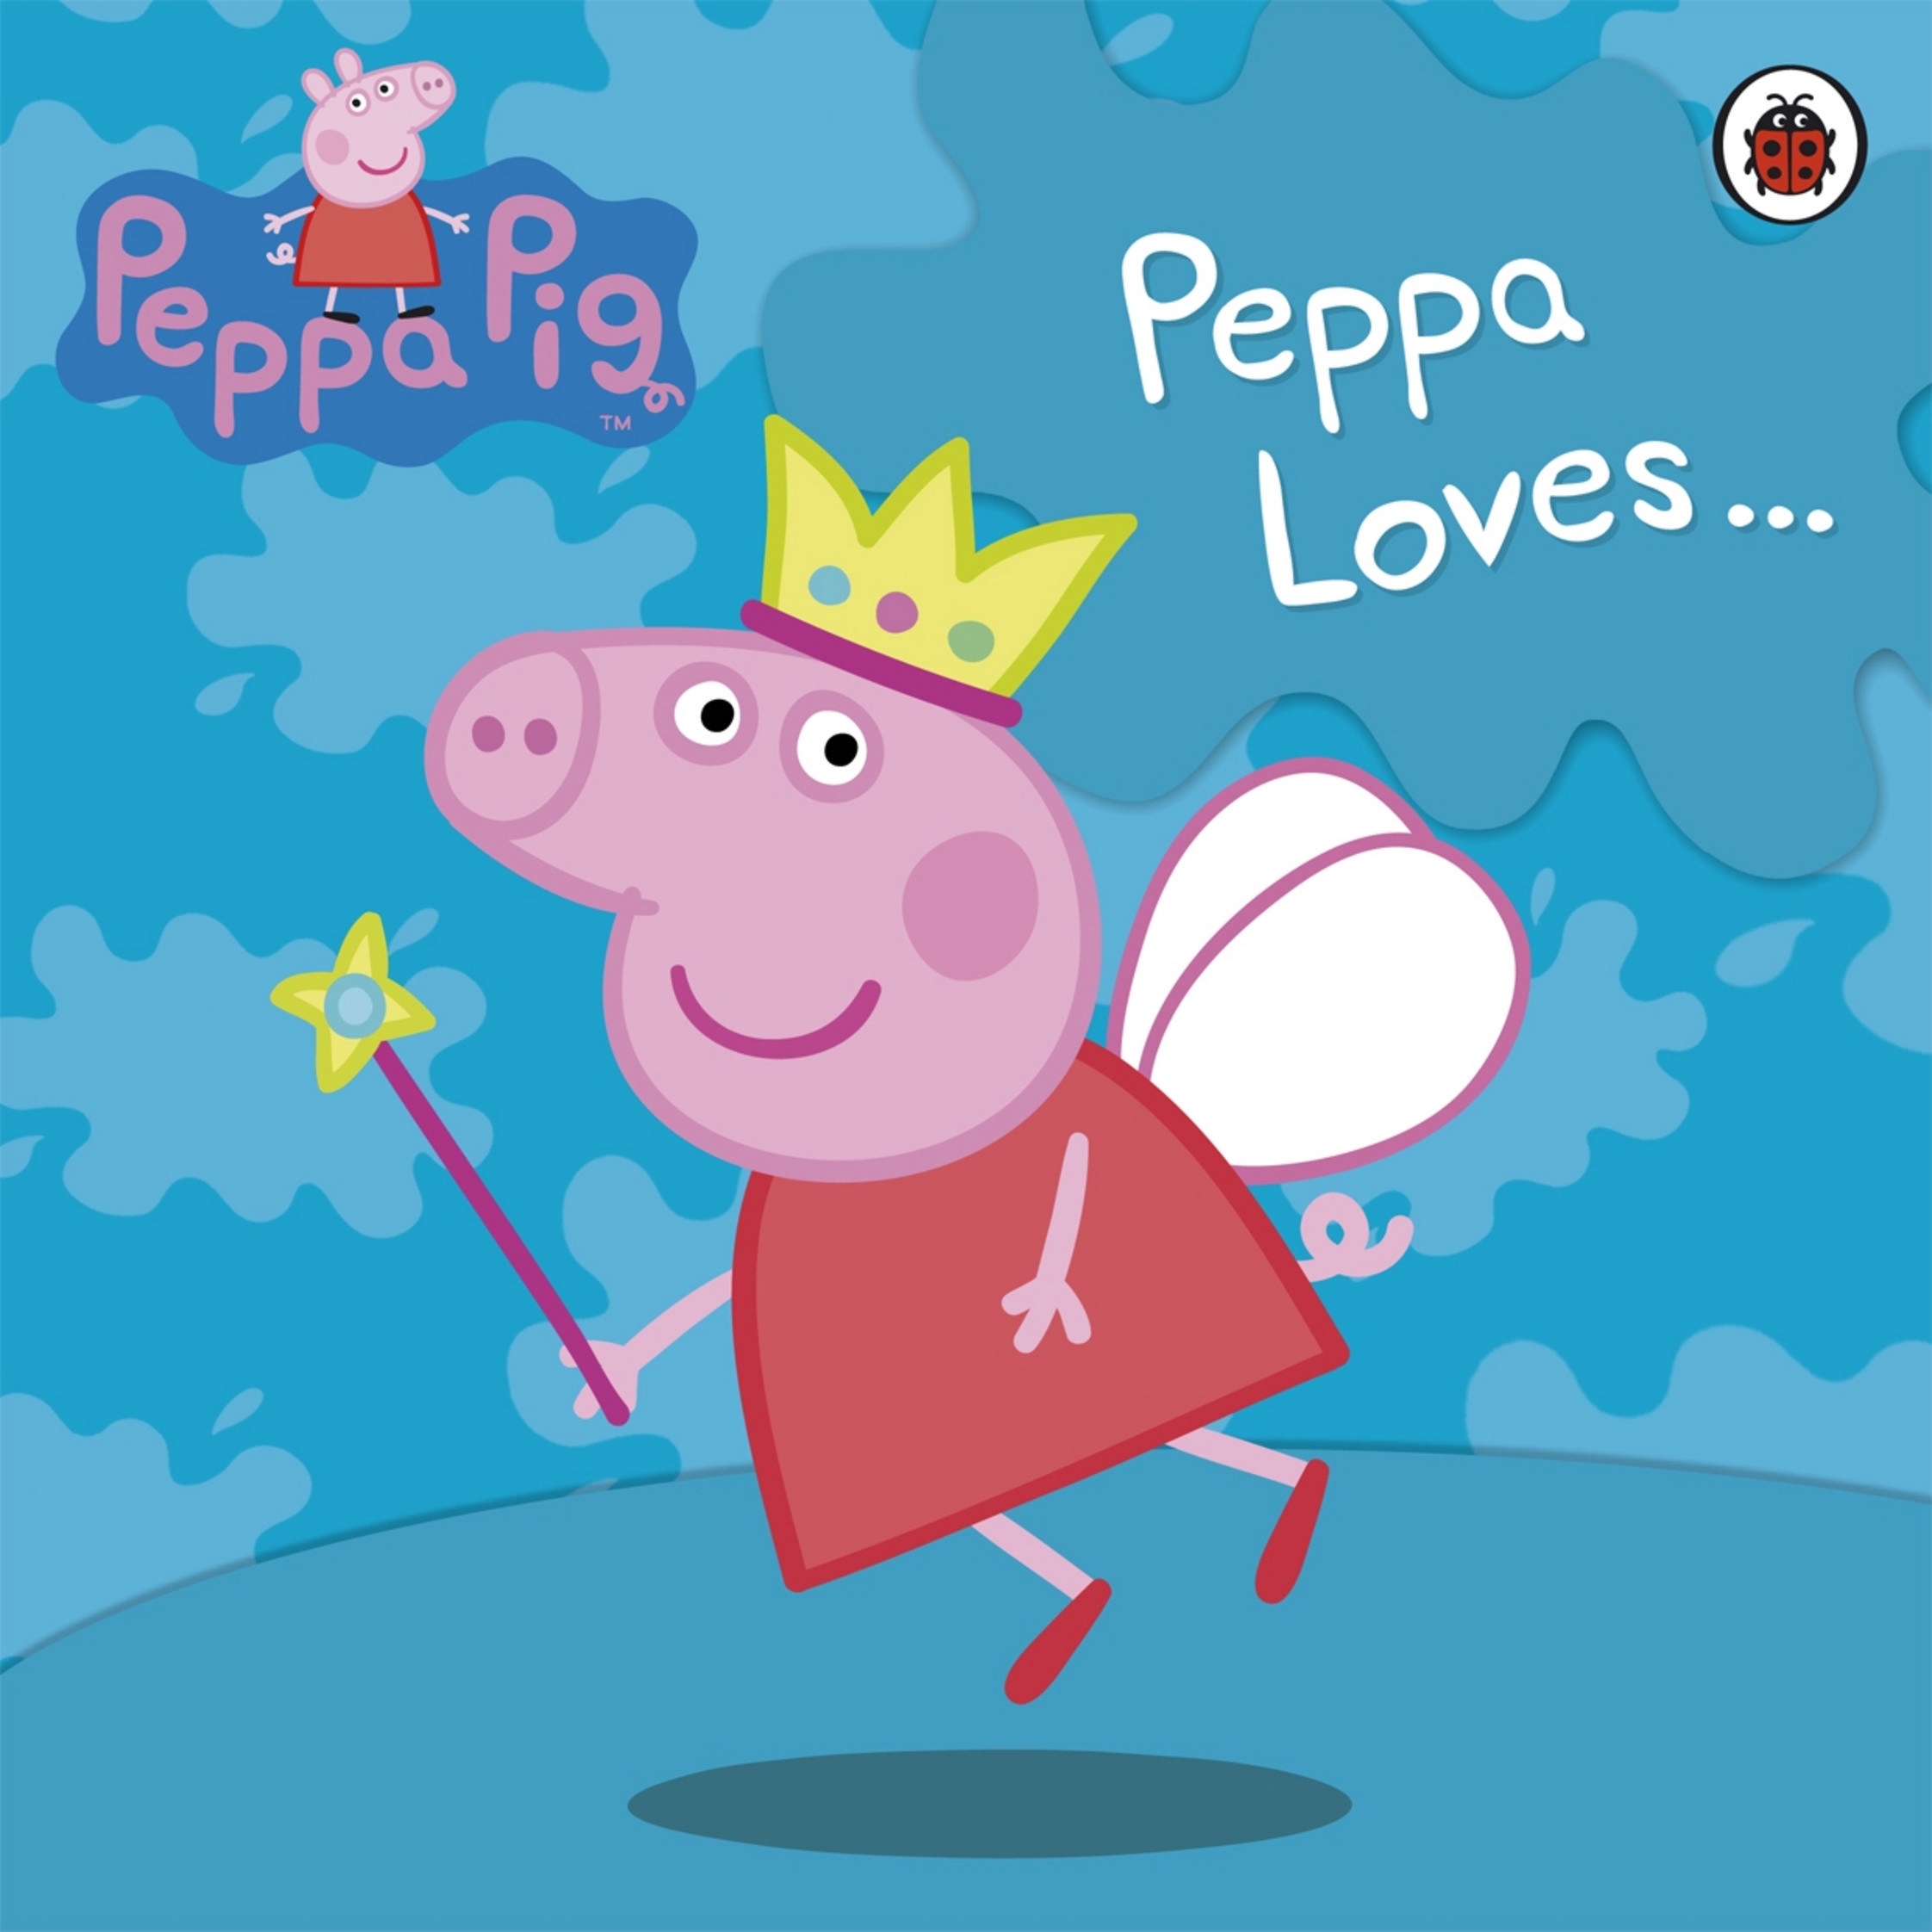 Peppa Pig Toys Desktop Wallpaper